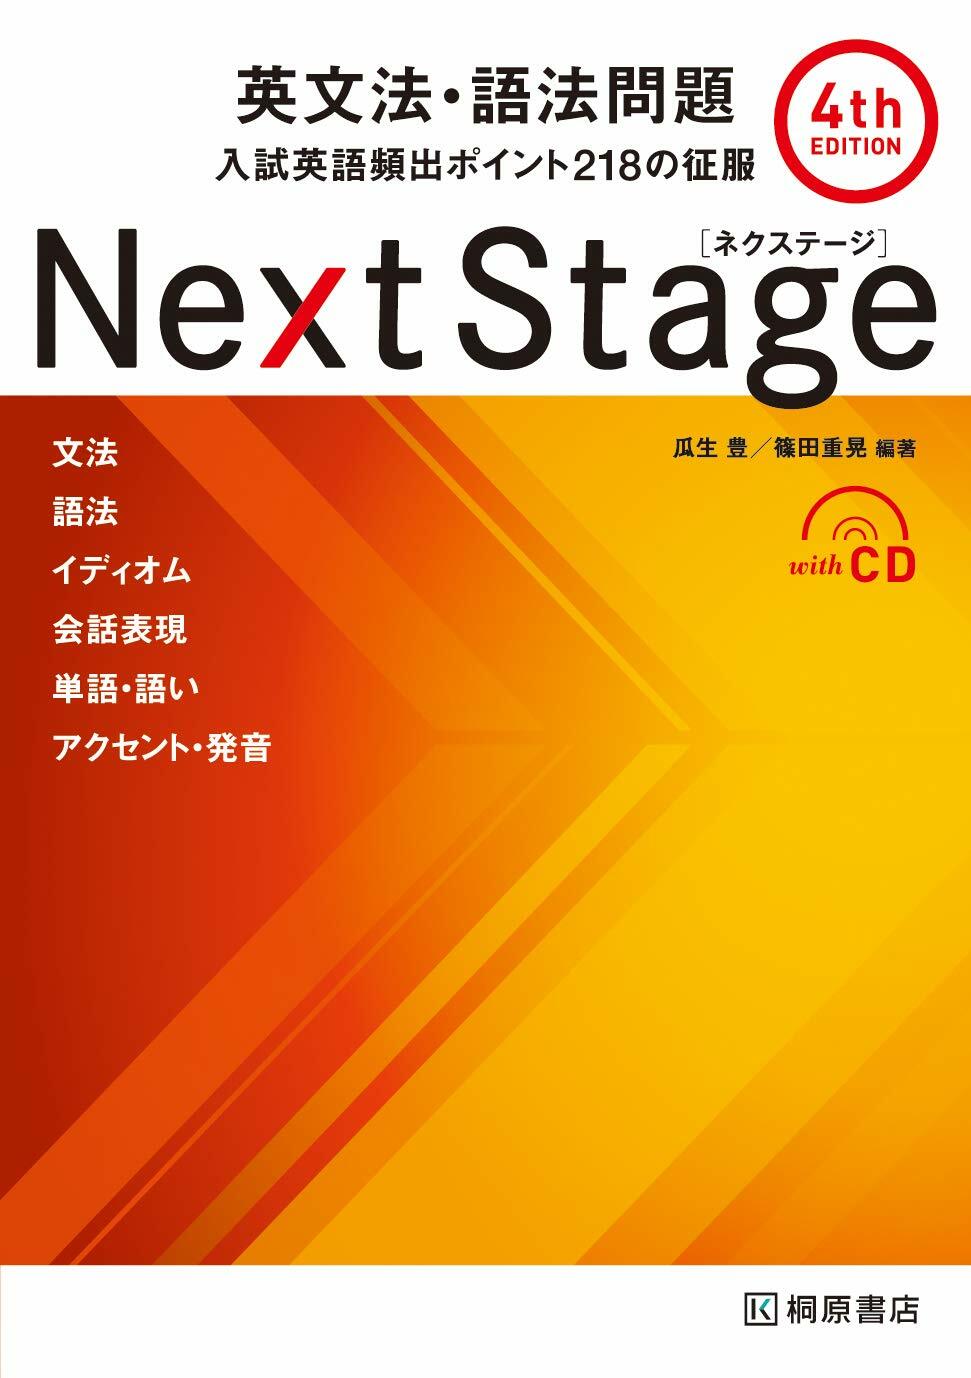 Next Stage[ネクステ-ジ]英文法·語法問題 4th edition